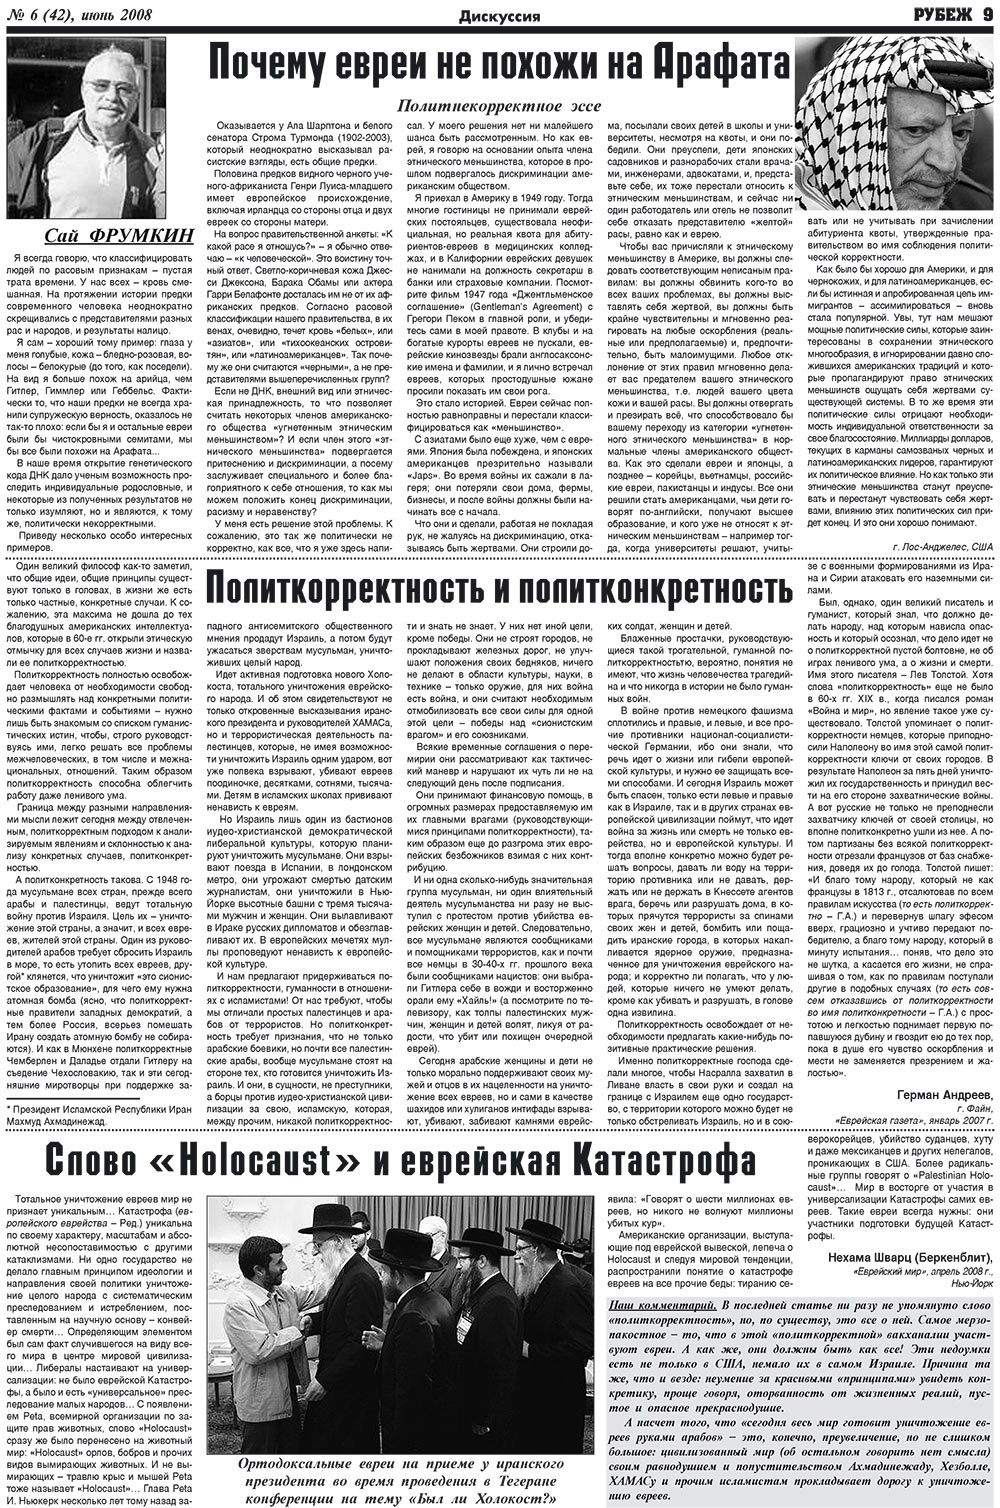 Рубеж, газета. 2008 №6 стр.9